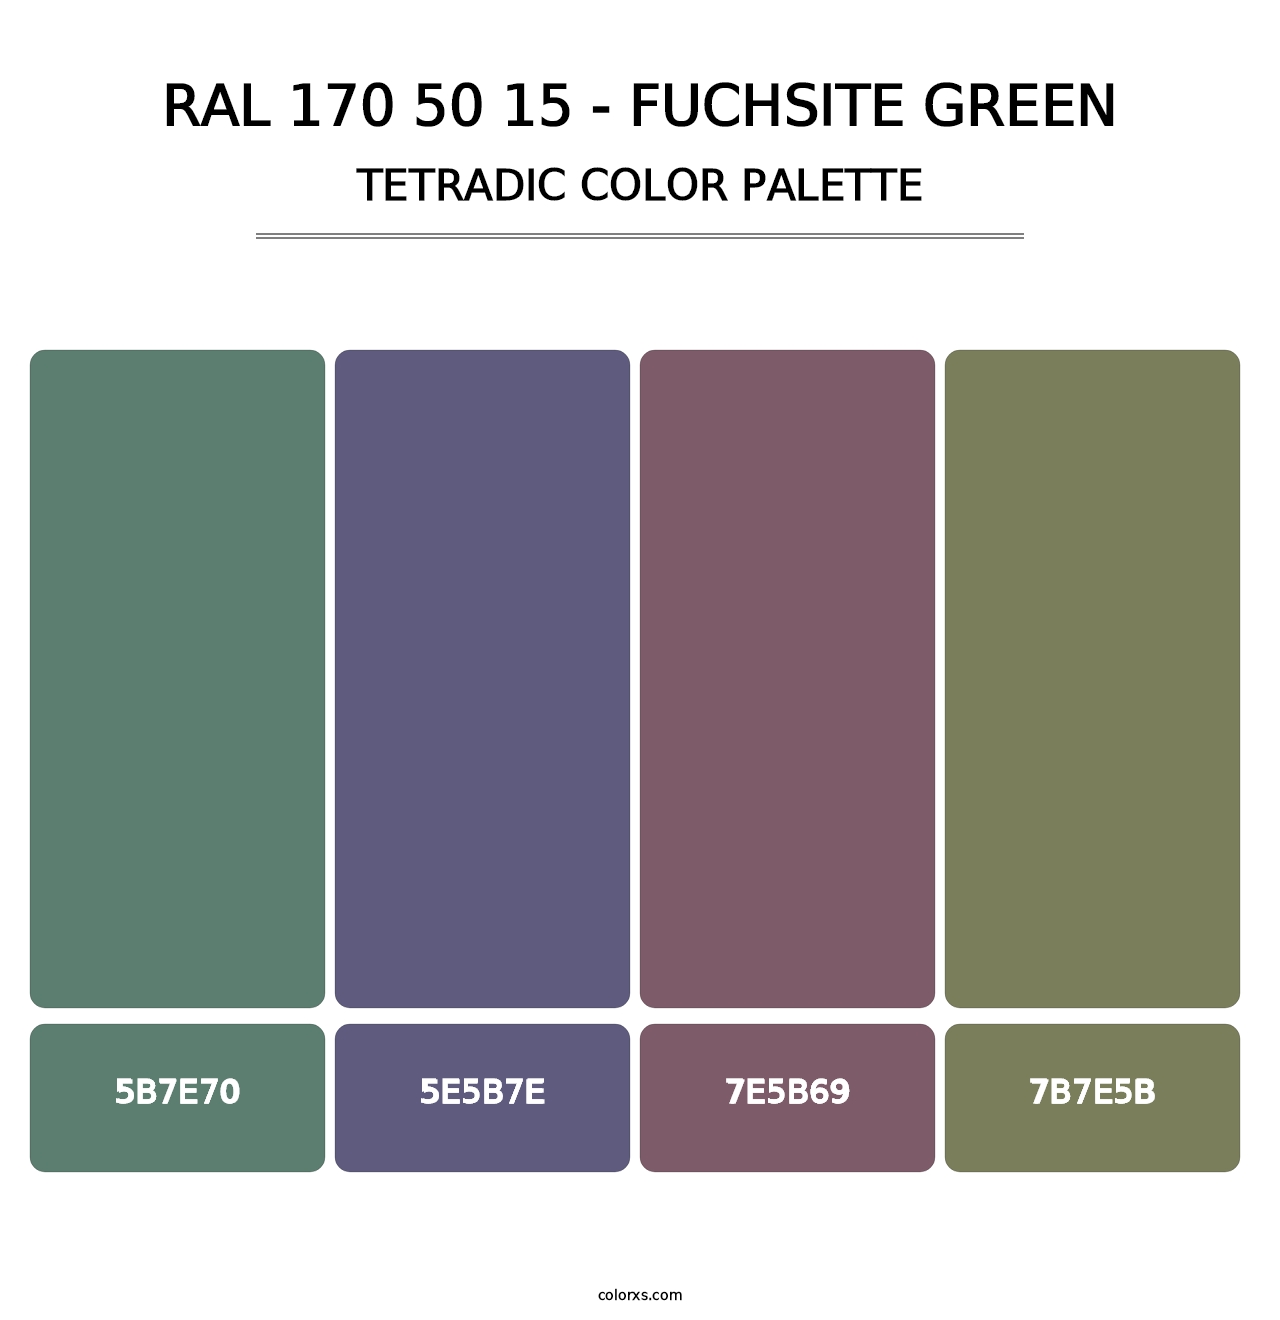 RAL 170 50 15 - Fuchsite Green - Tetradic Color Palette